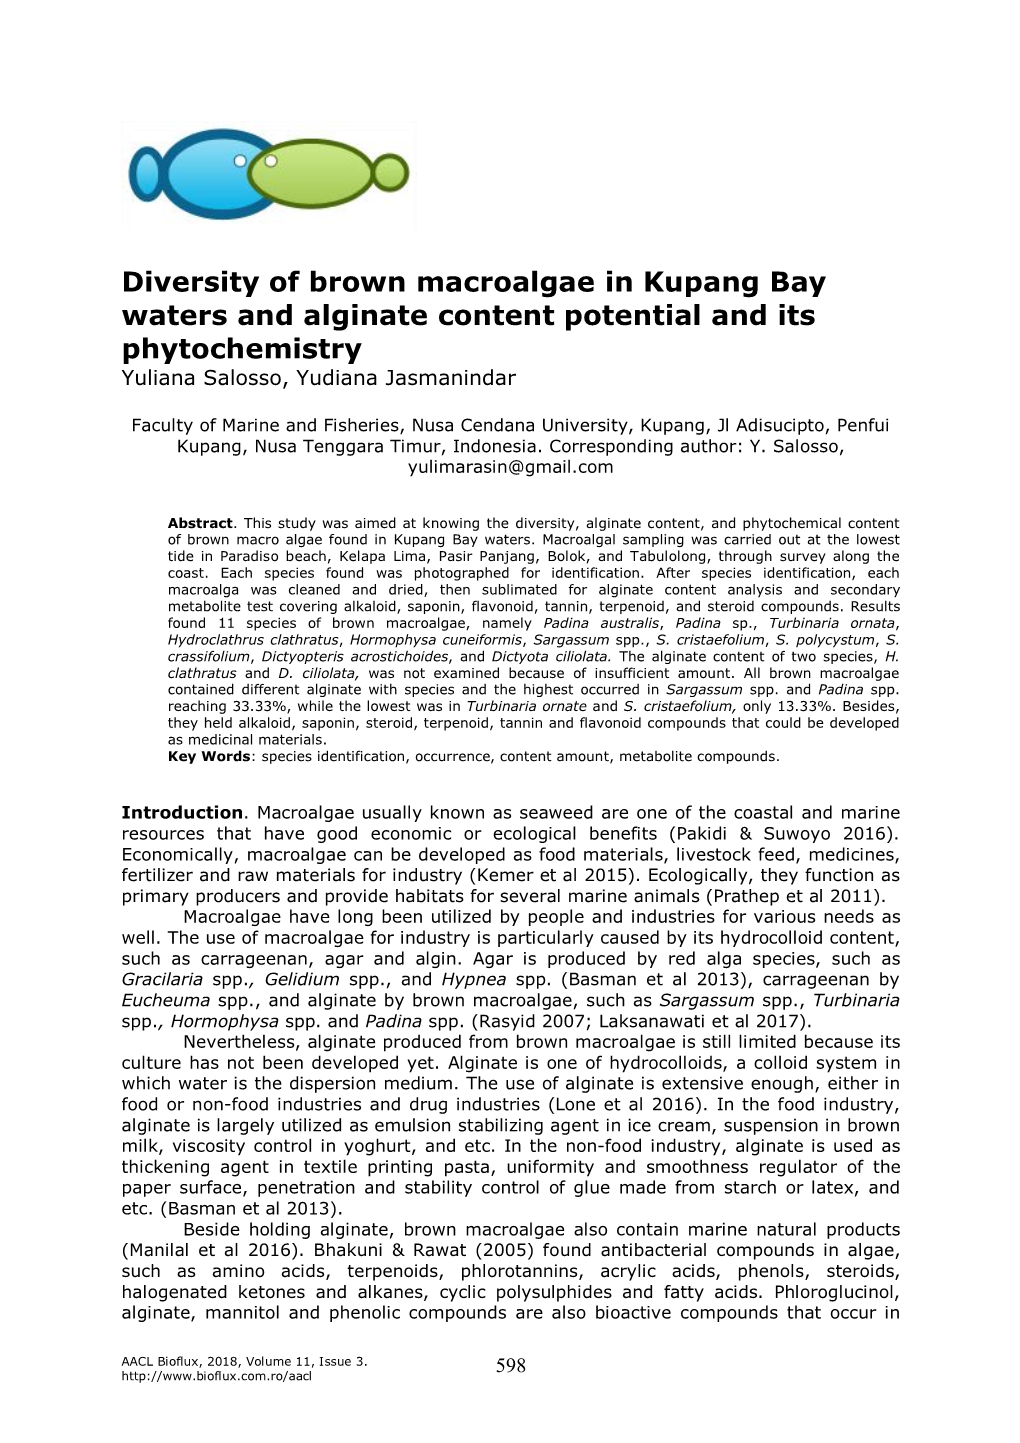 Diversity of Brown Macroalgae in Kupang Bay Waters and Alginate Content Potential and Its Phytochemistry Yuliana Salosso, Yudiana Jasmanindar